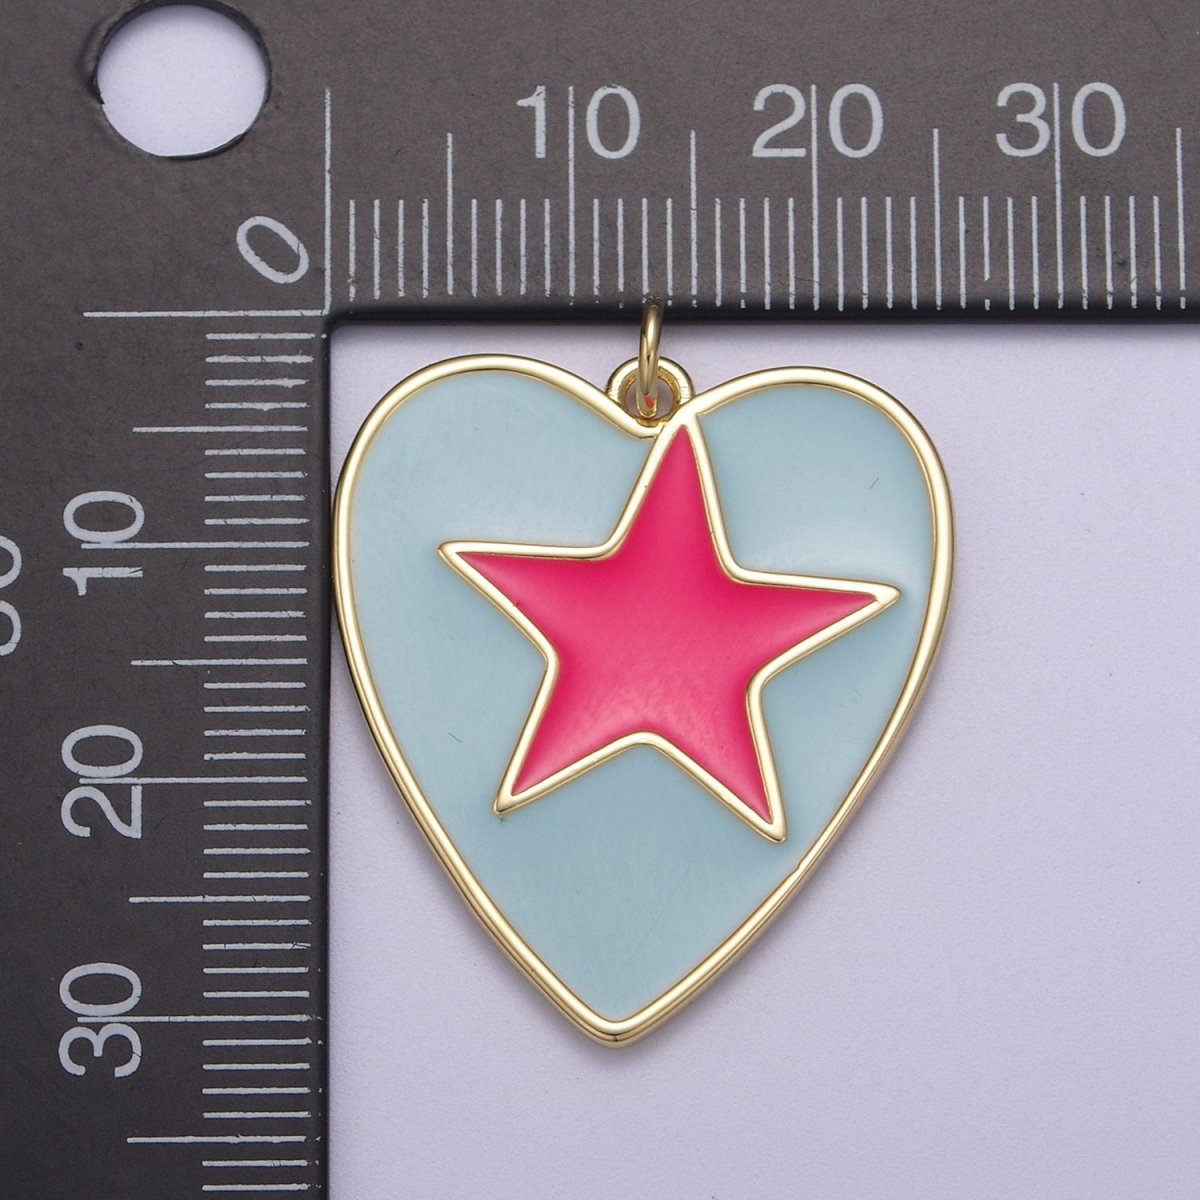 Enamel Colorful Five Point Star On Heart Shape Pendant, 14K Gold Filled Blue Enamel Charm N-300 - DLUXCA